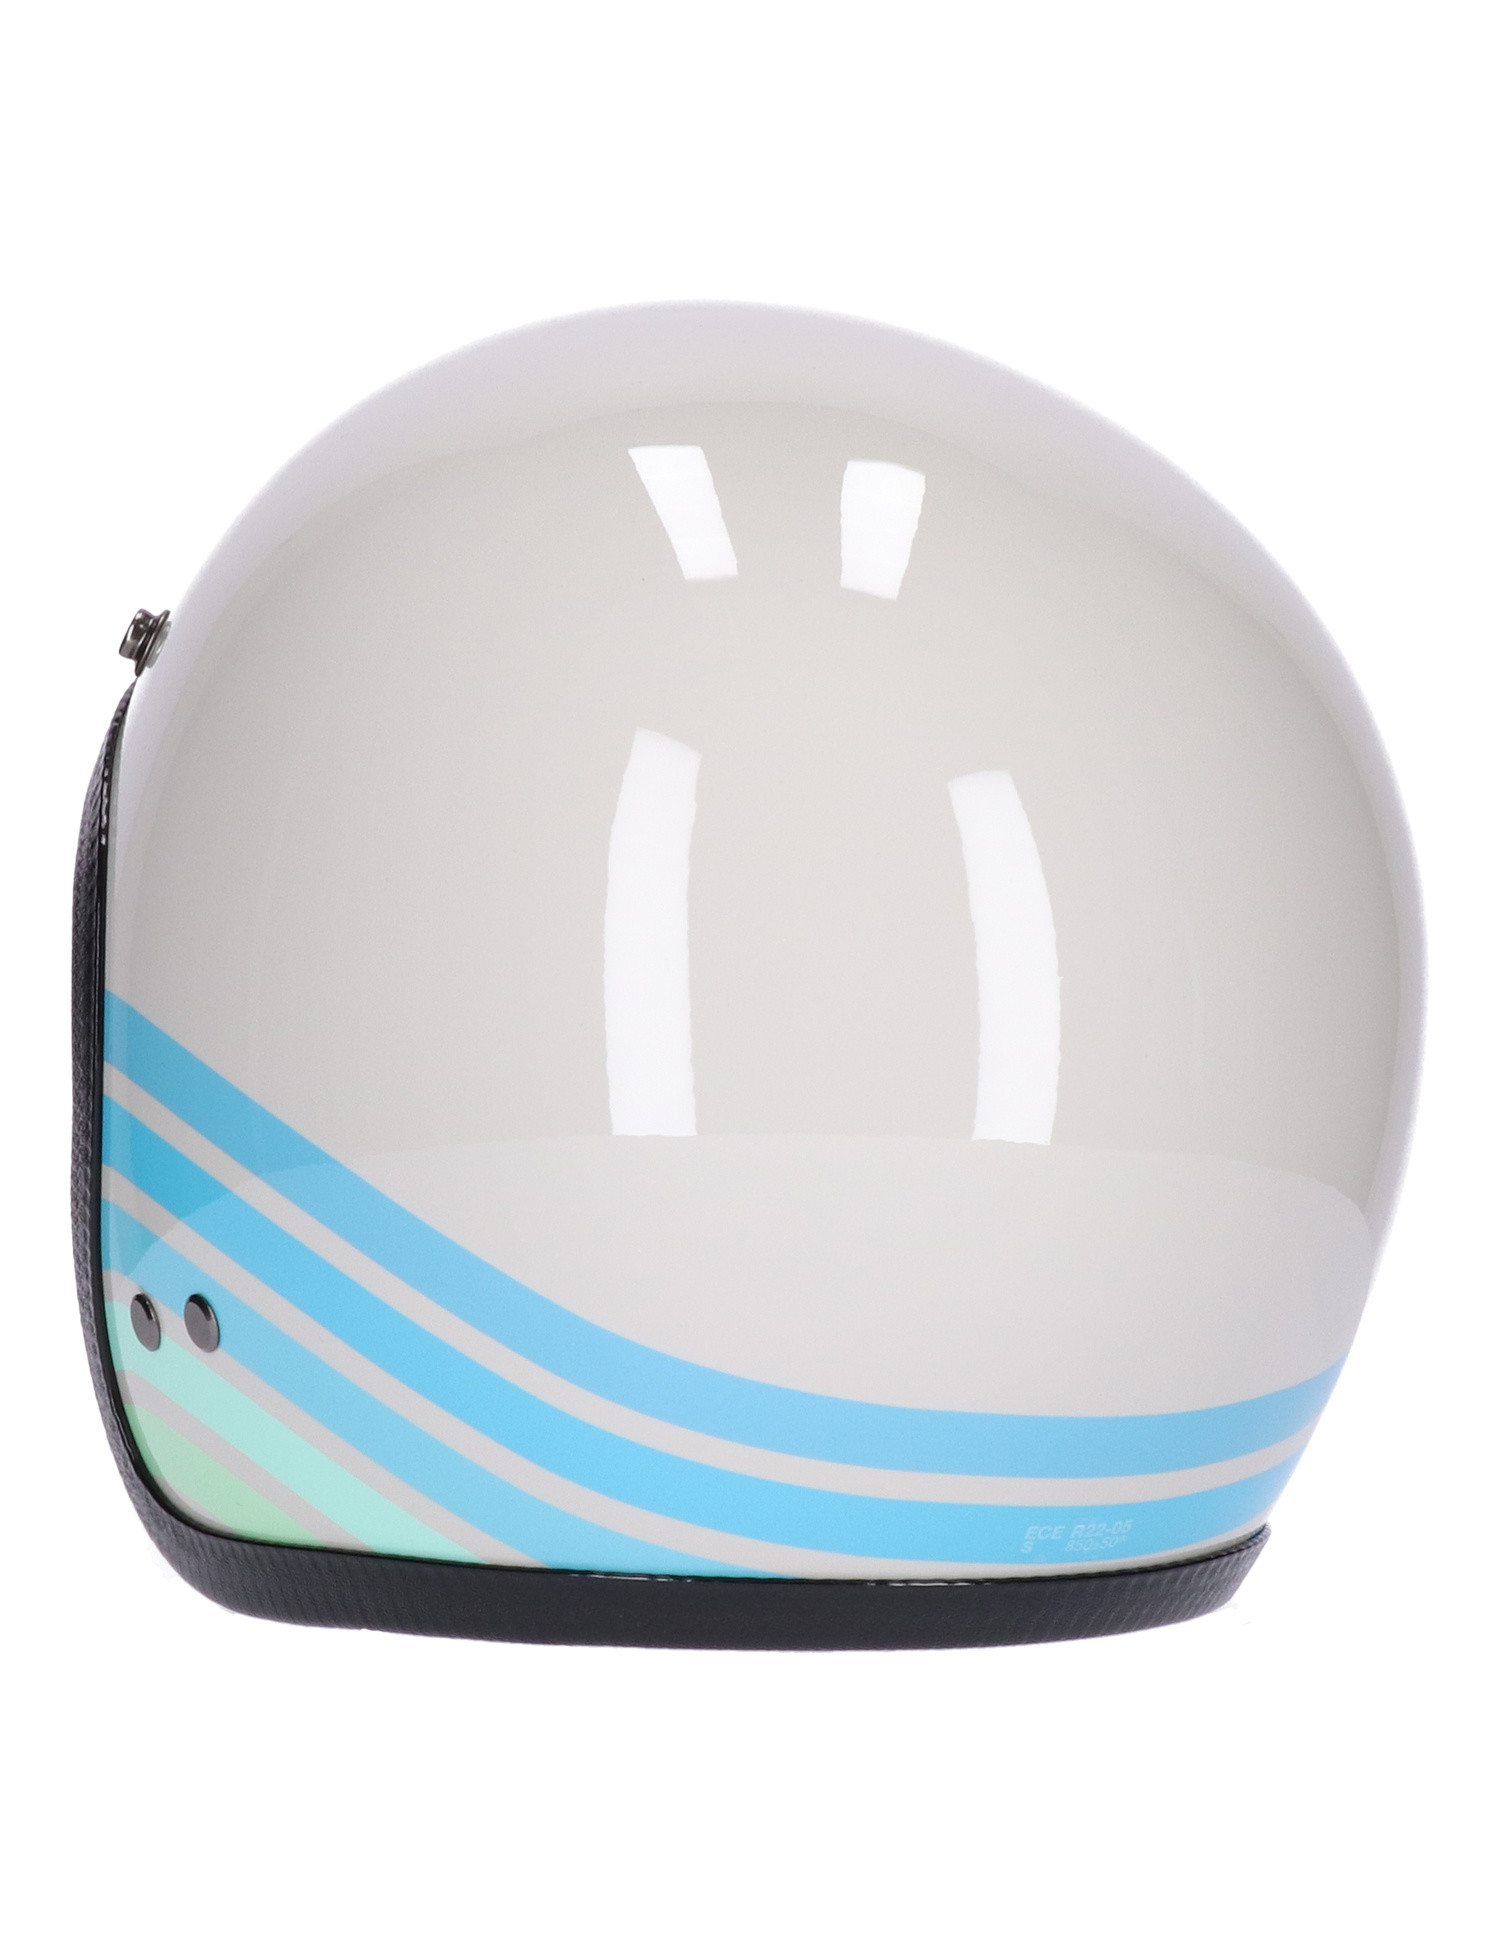 JETTson 2.0 Helmet Wai white